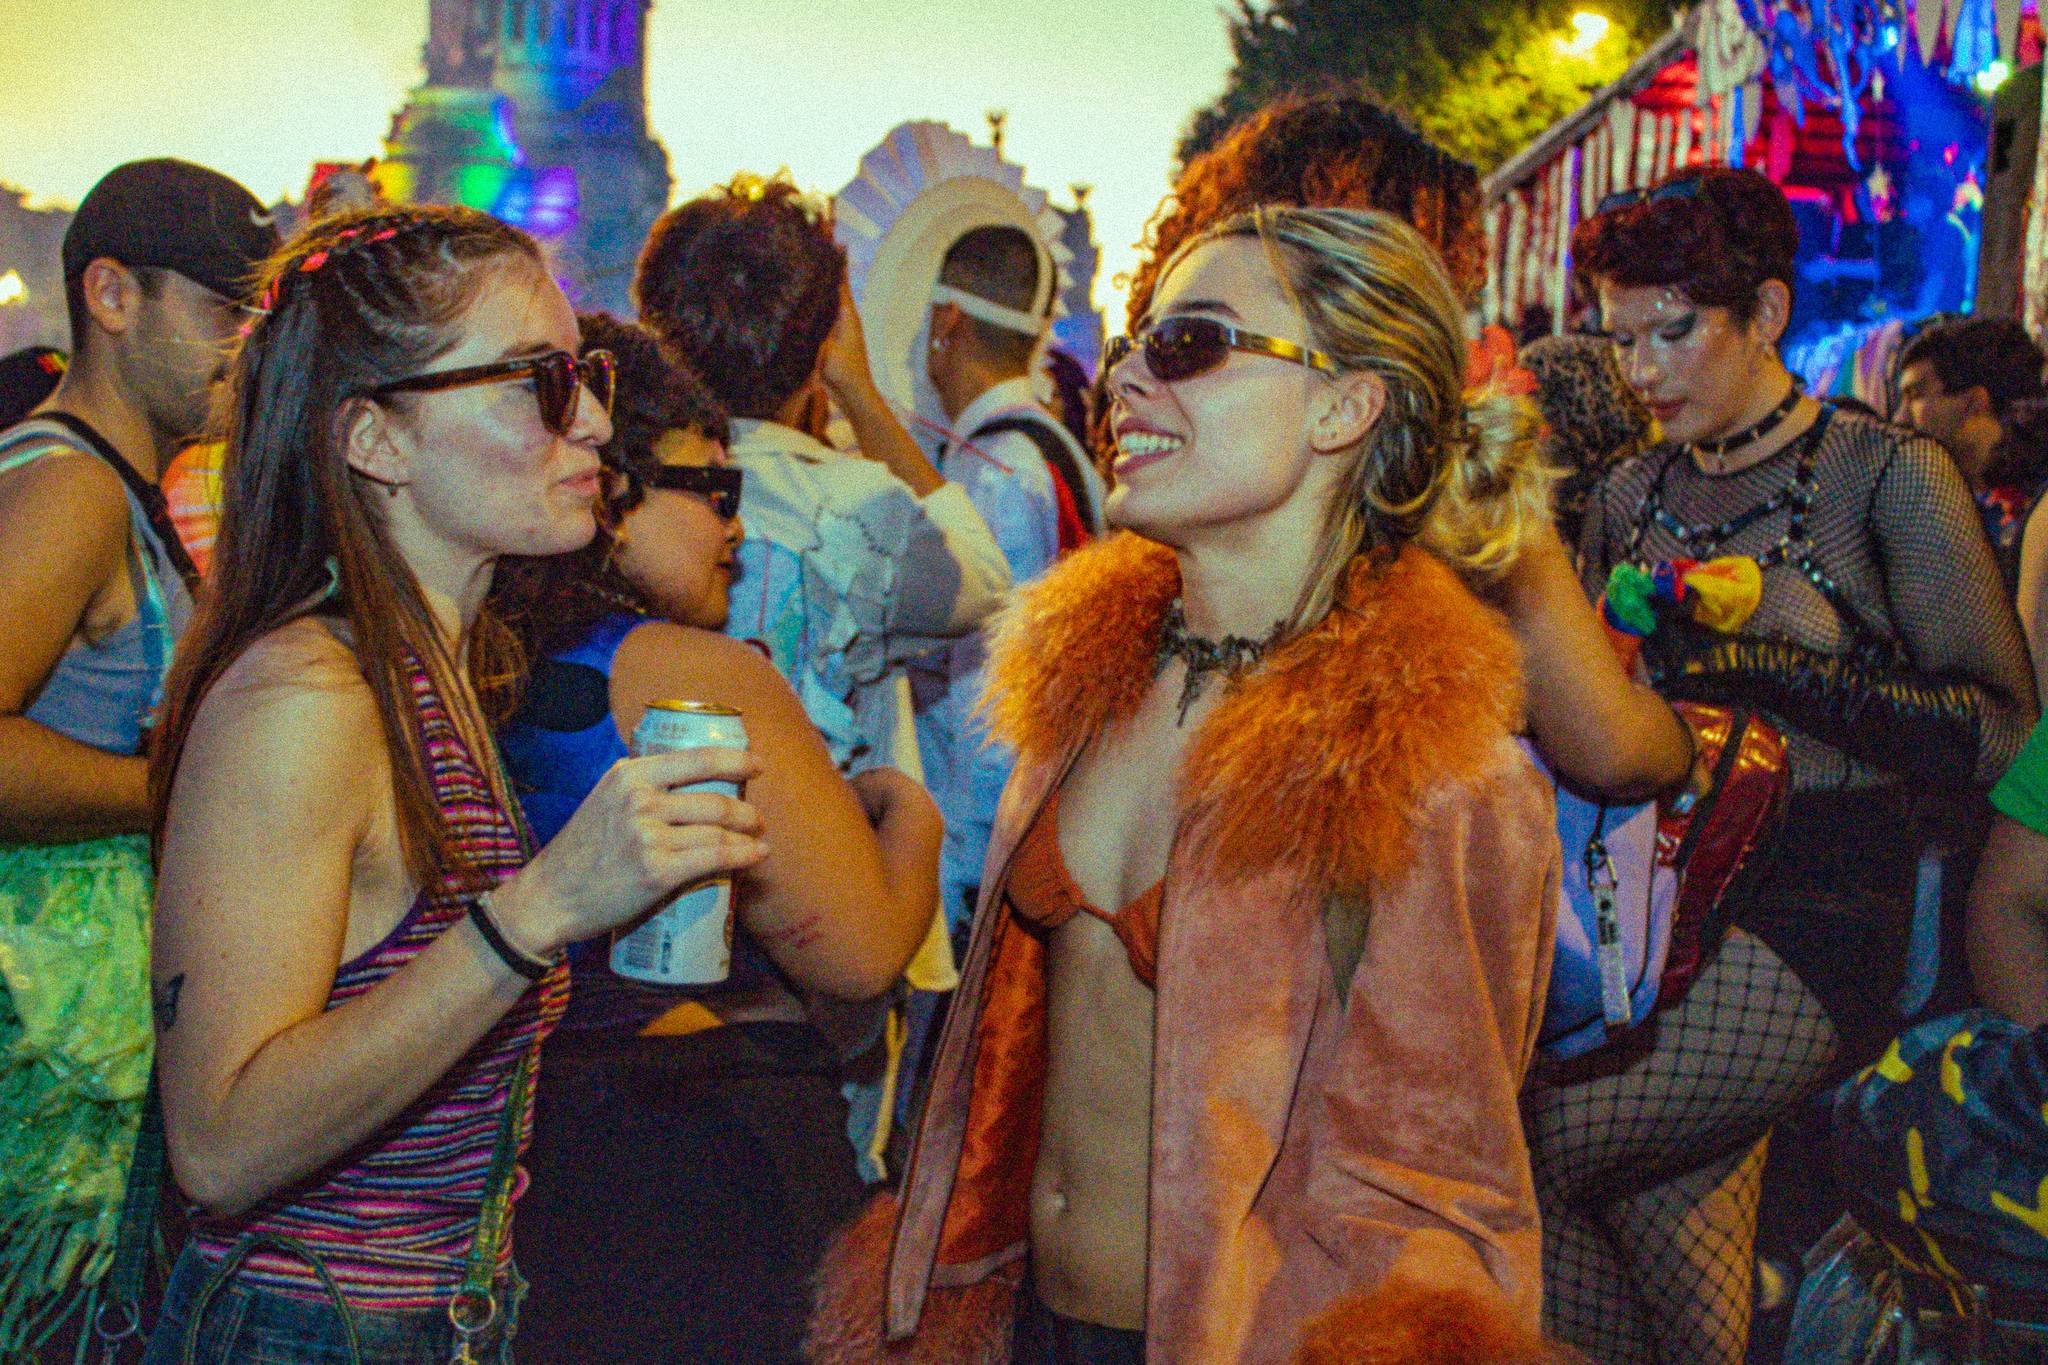 UK rave culture speaks to renewed desires for escapism